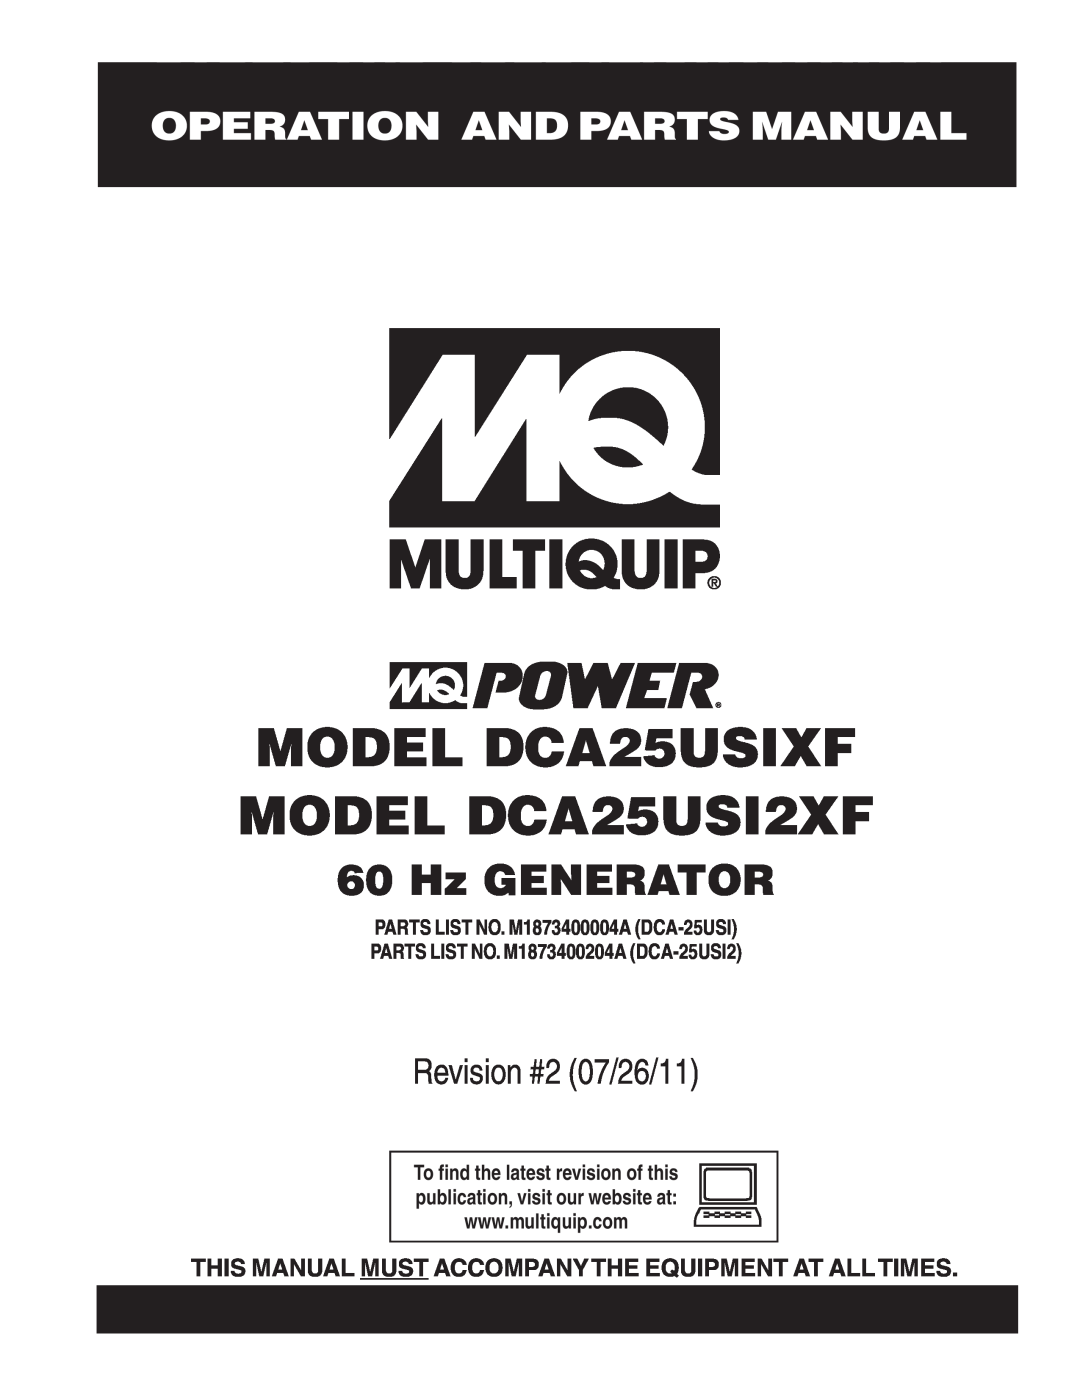 Multiquip DCA25USI2XF operation manual Operation And Parts Manual, PARTS LIST NO. M1873400004A DCA-25USI, Hz GENERATOR 